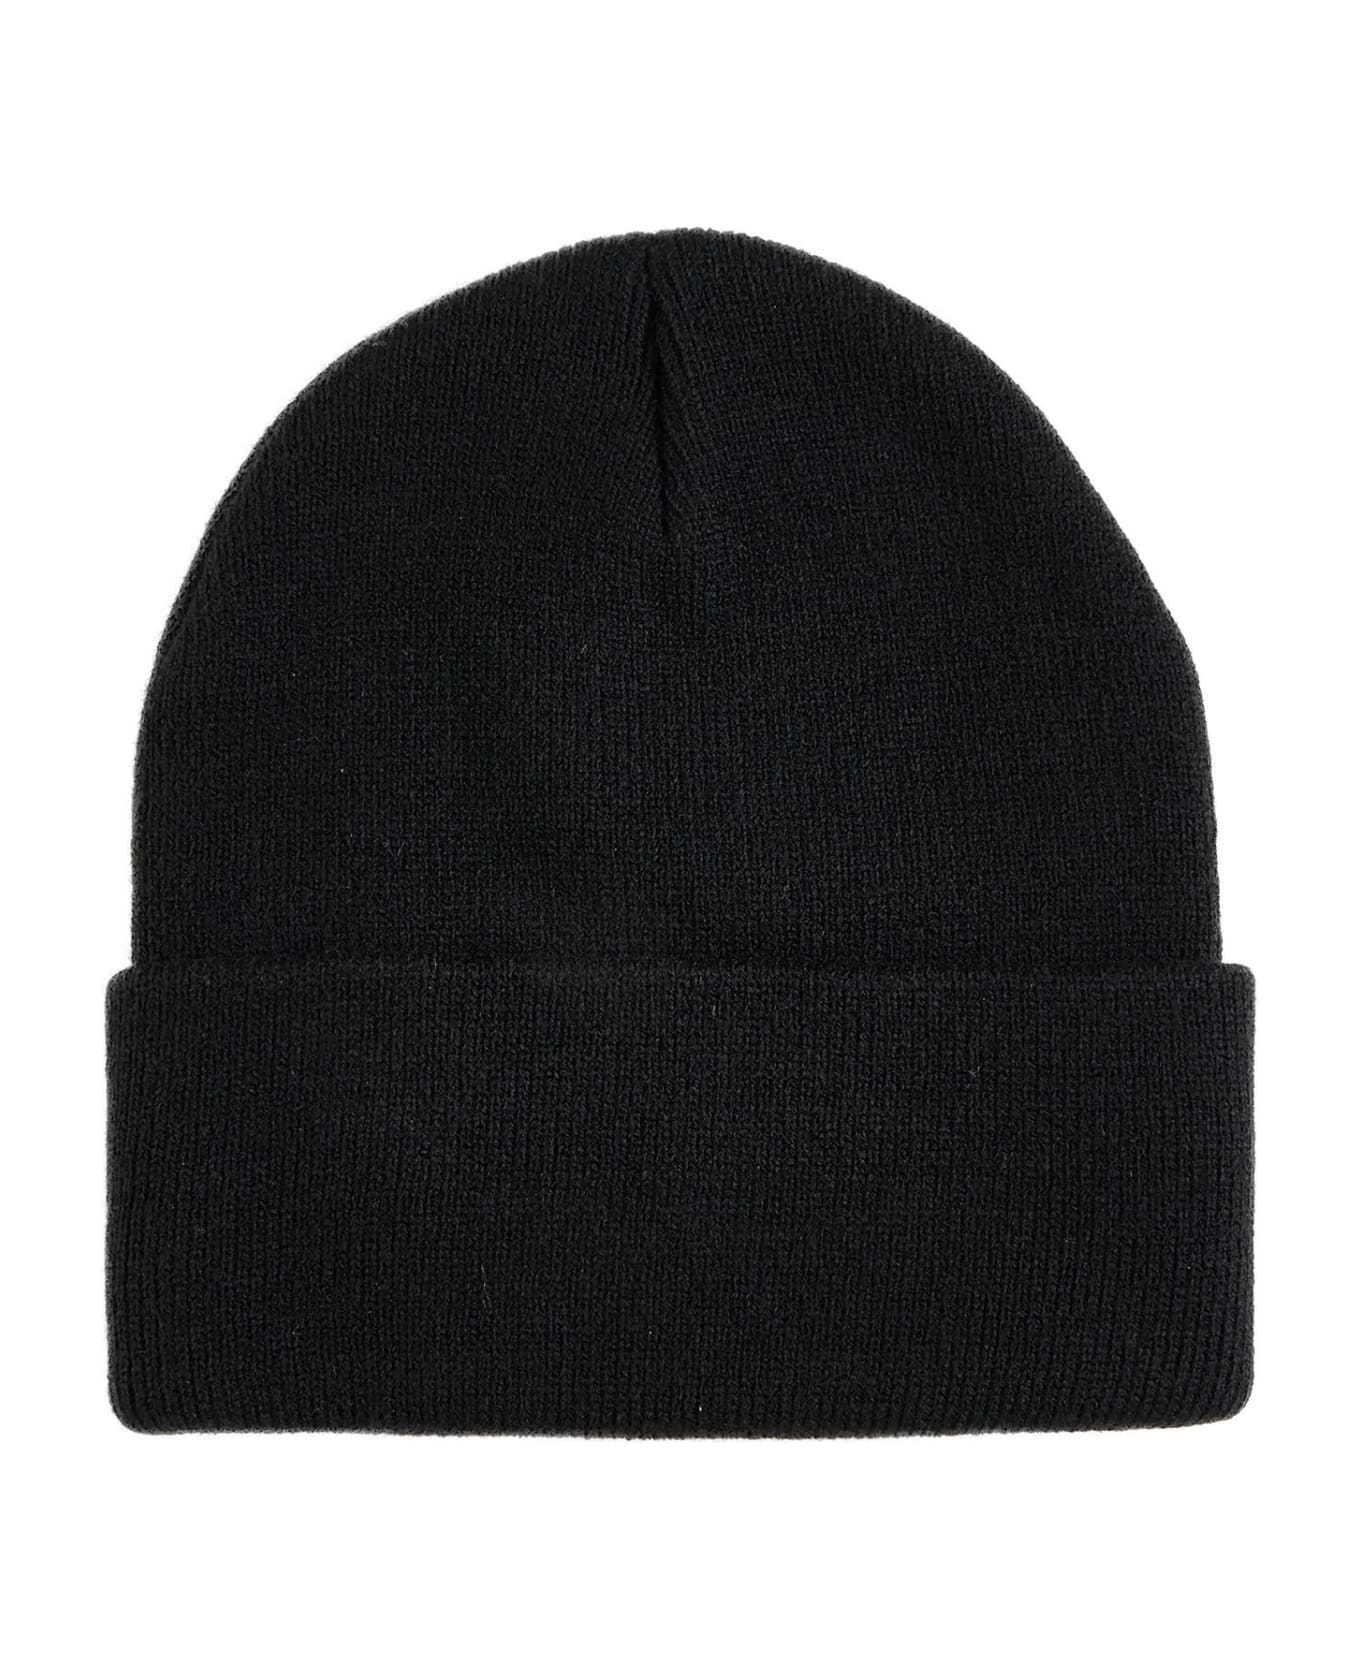 Carhartt Hat - Black 帽子